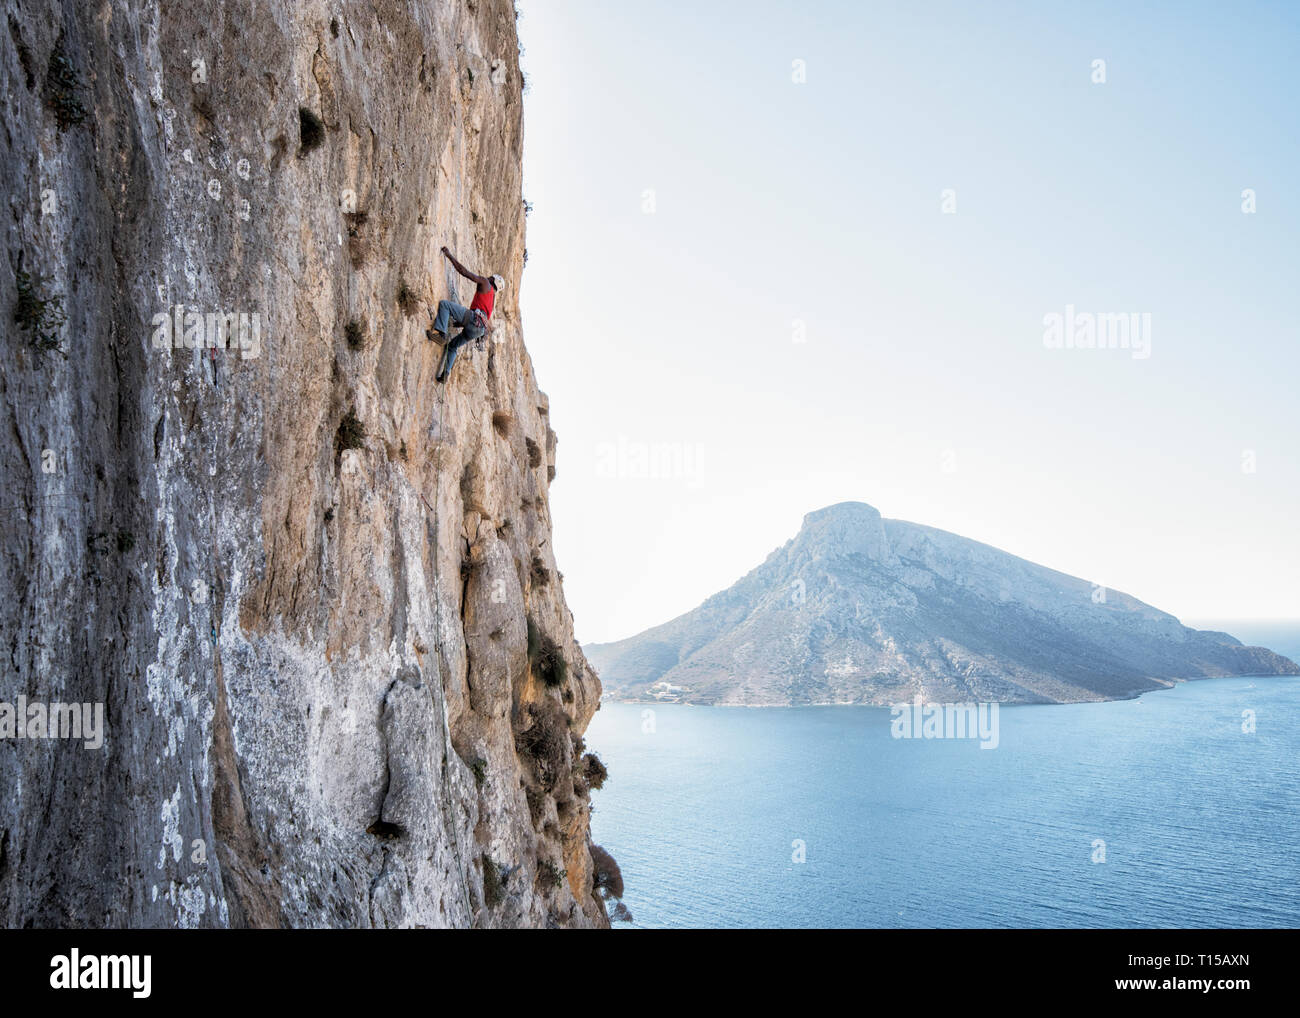 Griechenland, Kalymnos, Kletterer in der Felswand über dem Meer Stockfoto